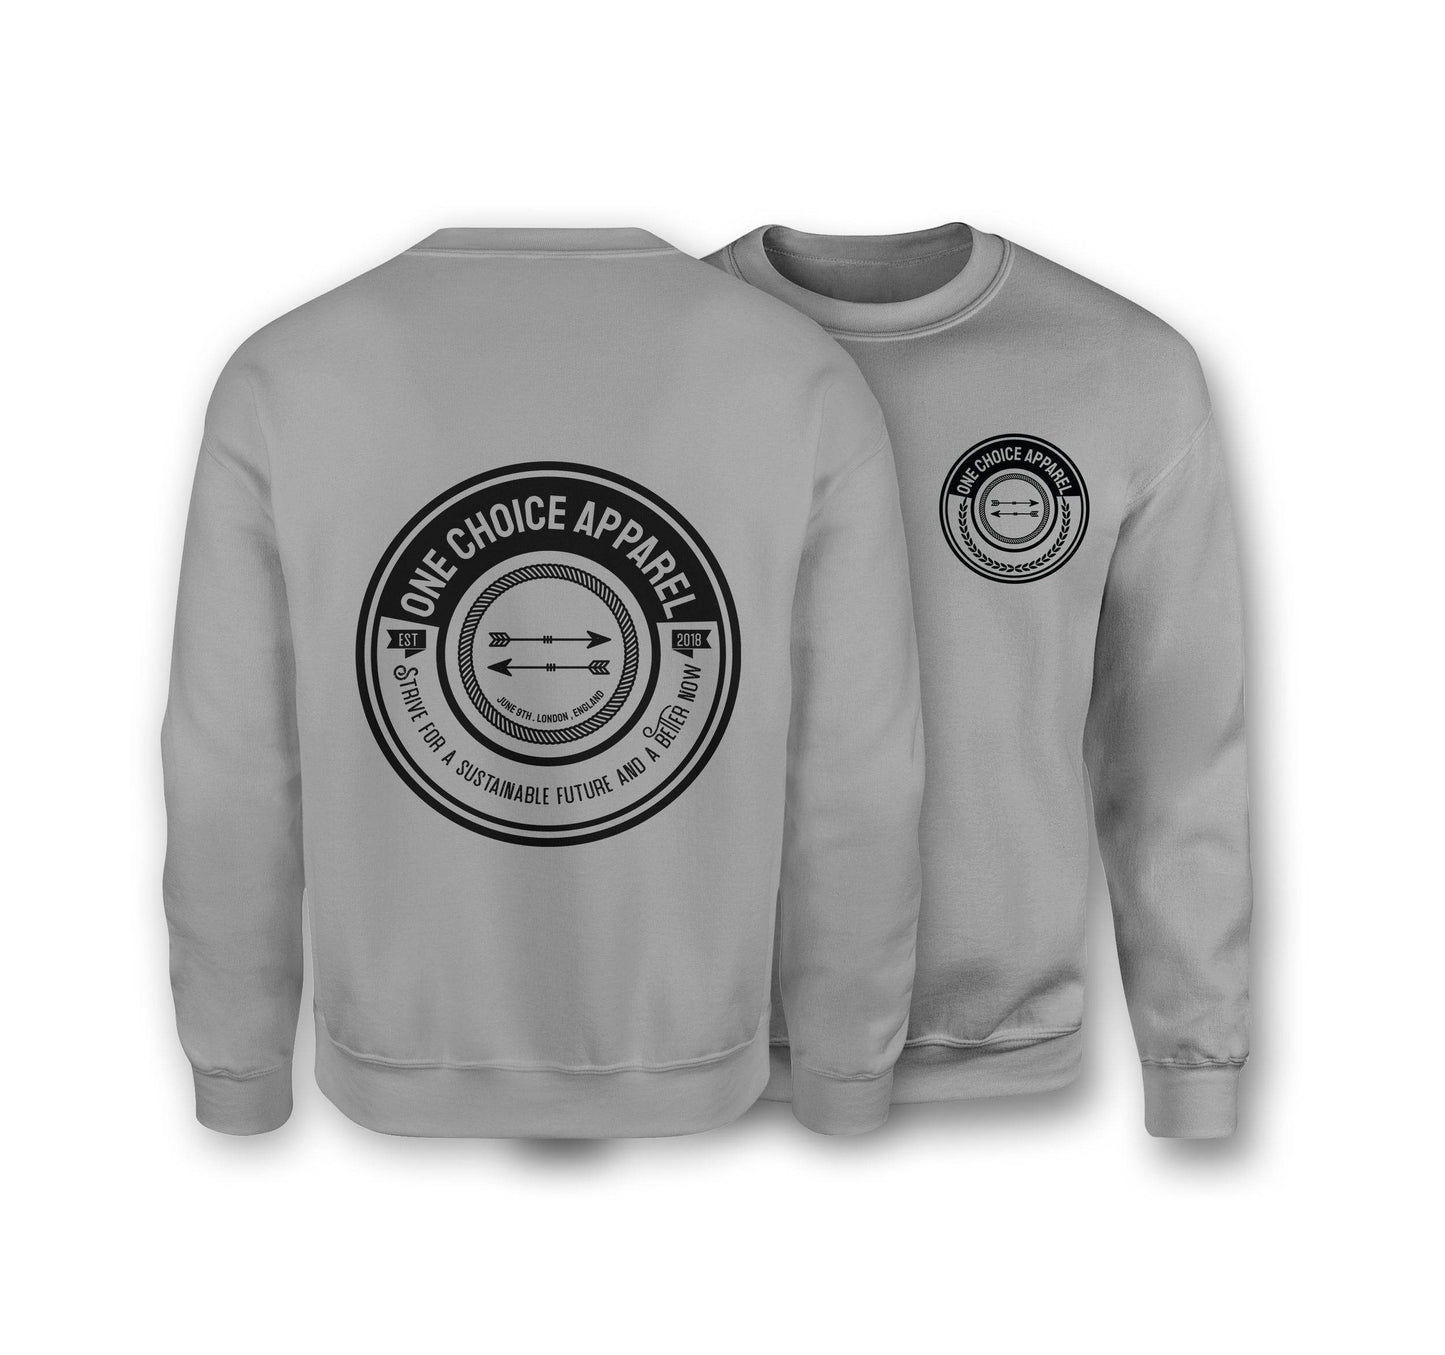 Strive Sweatshirt - Organic Cotton Sweatshirt - One Choice Apparel